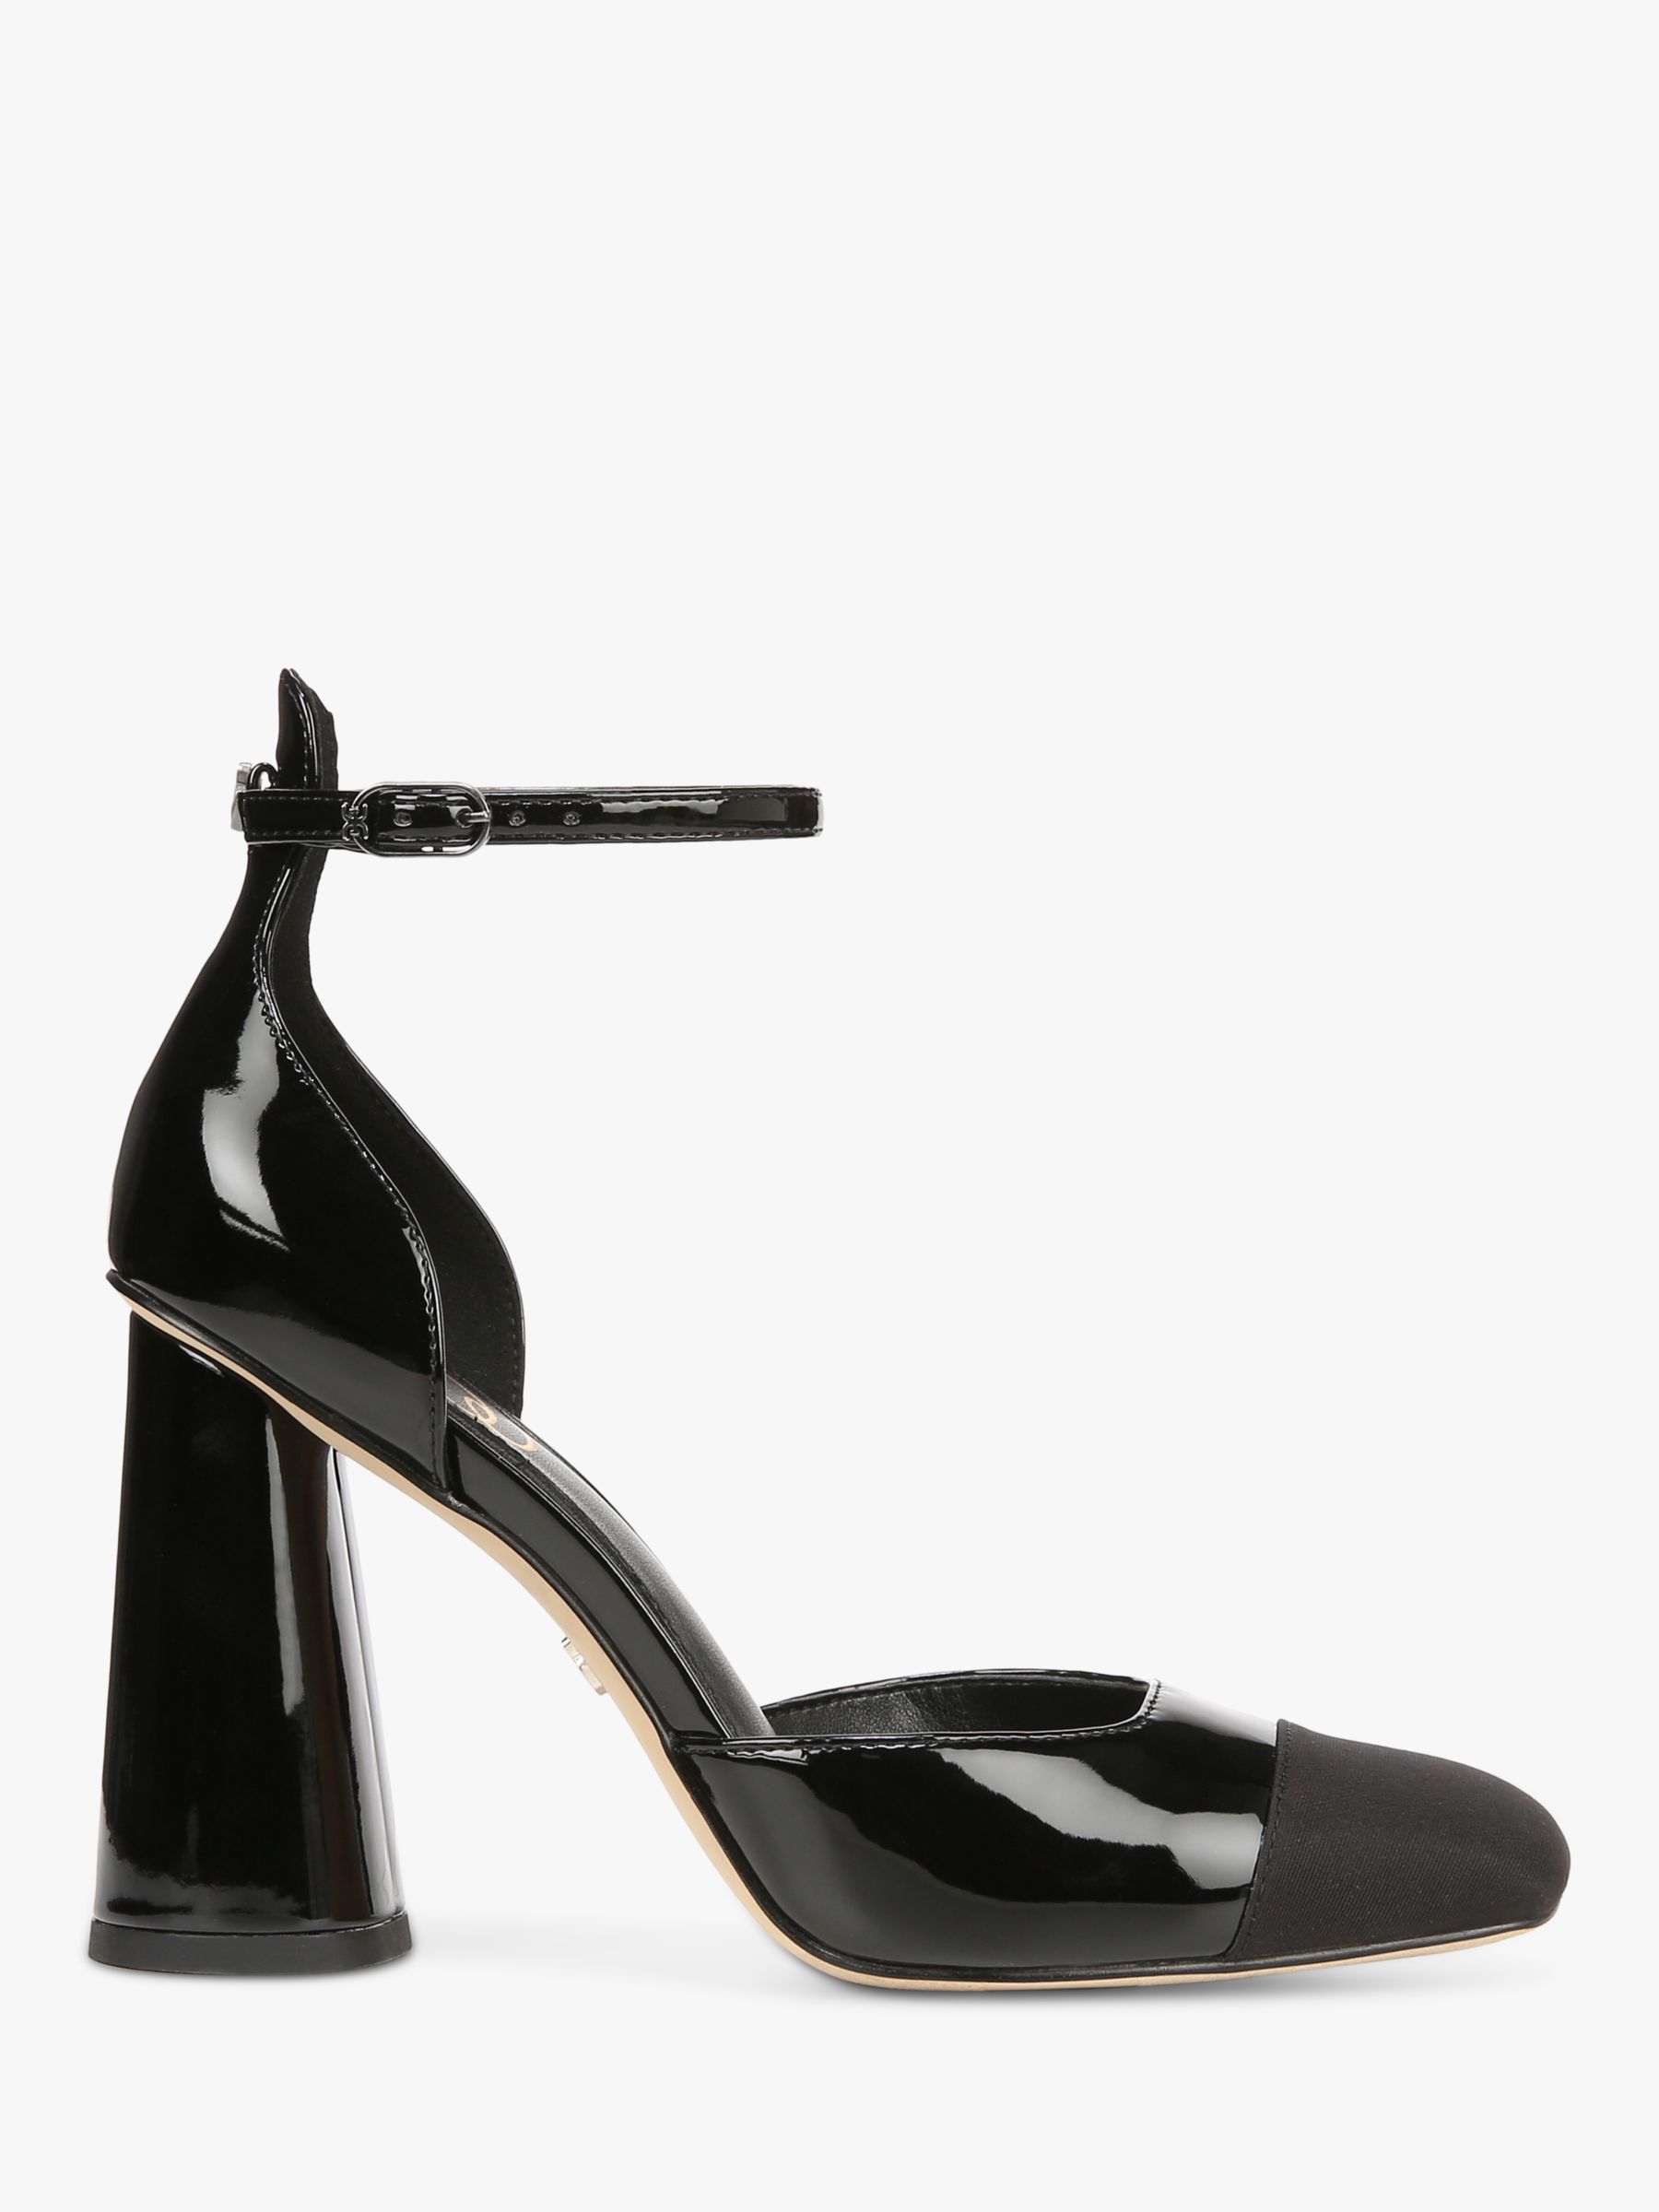 Sam Edelman Cristine Block Heel Shoes, Black, 3